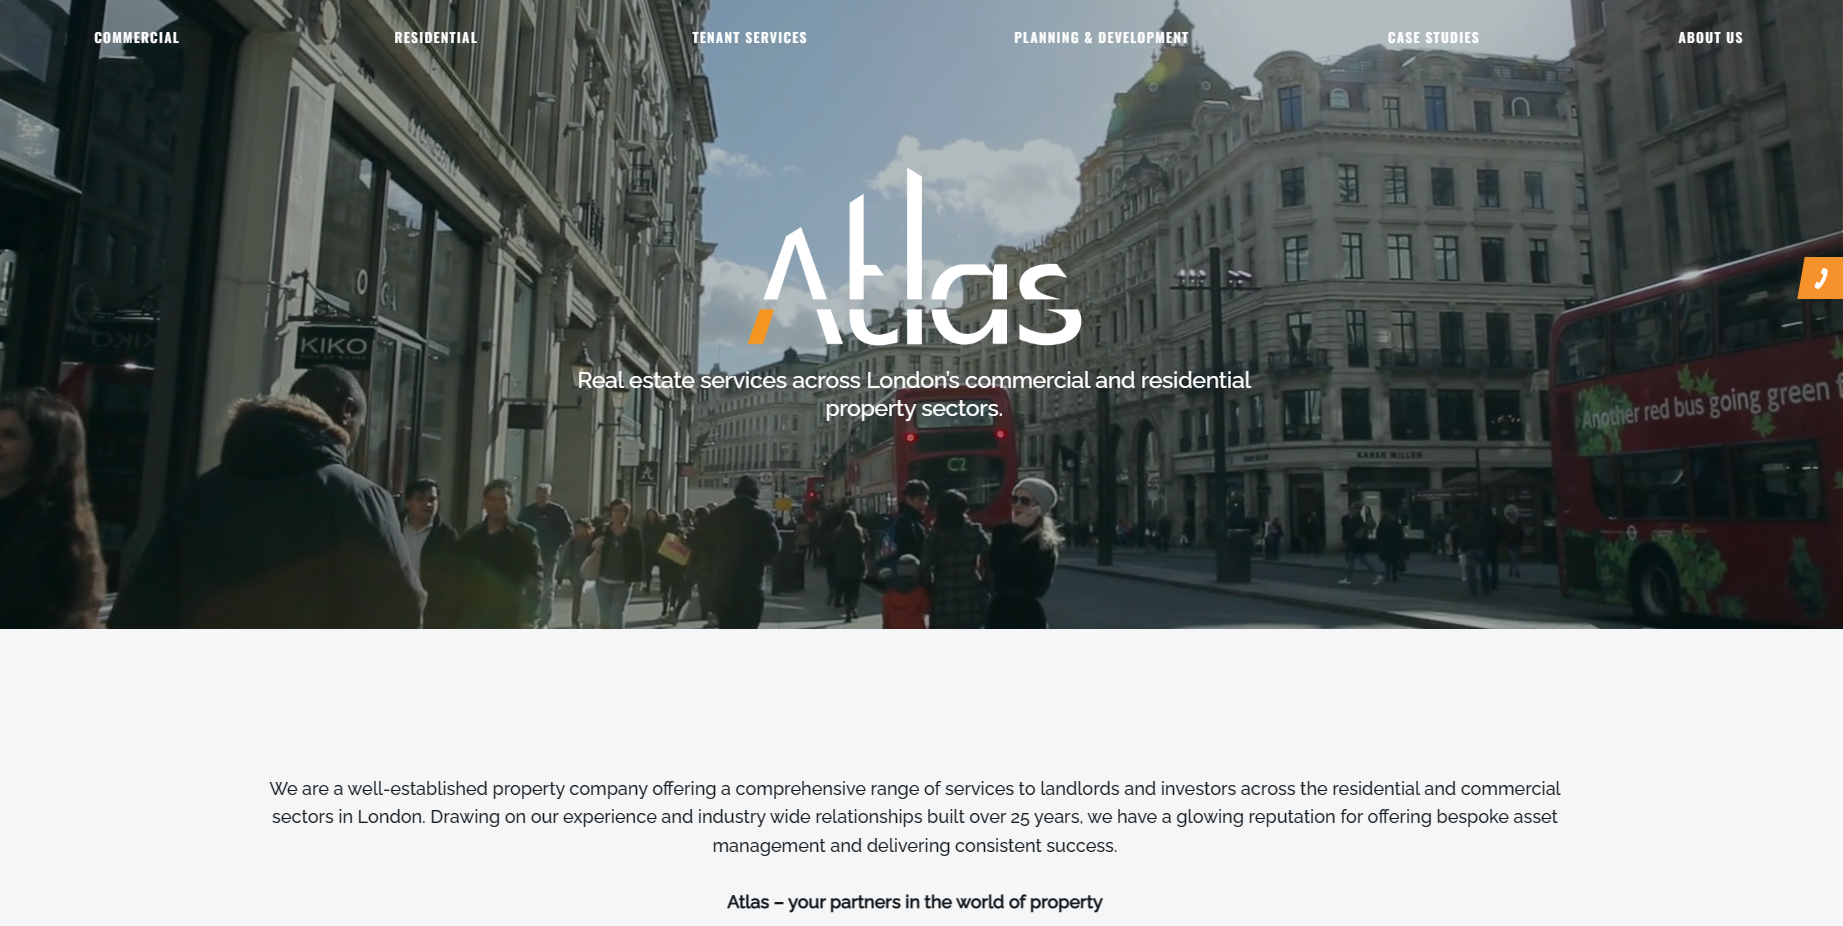 <b>Atlas Property website</b> : I